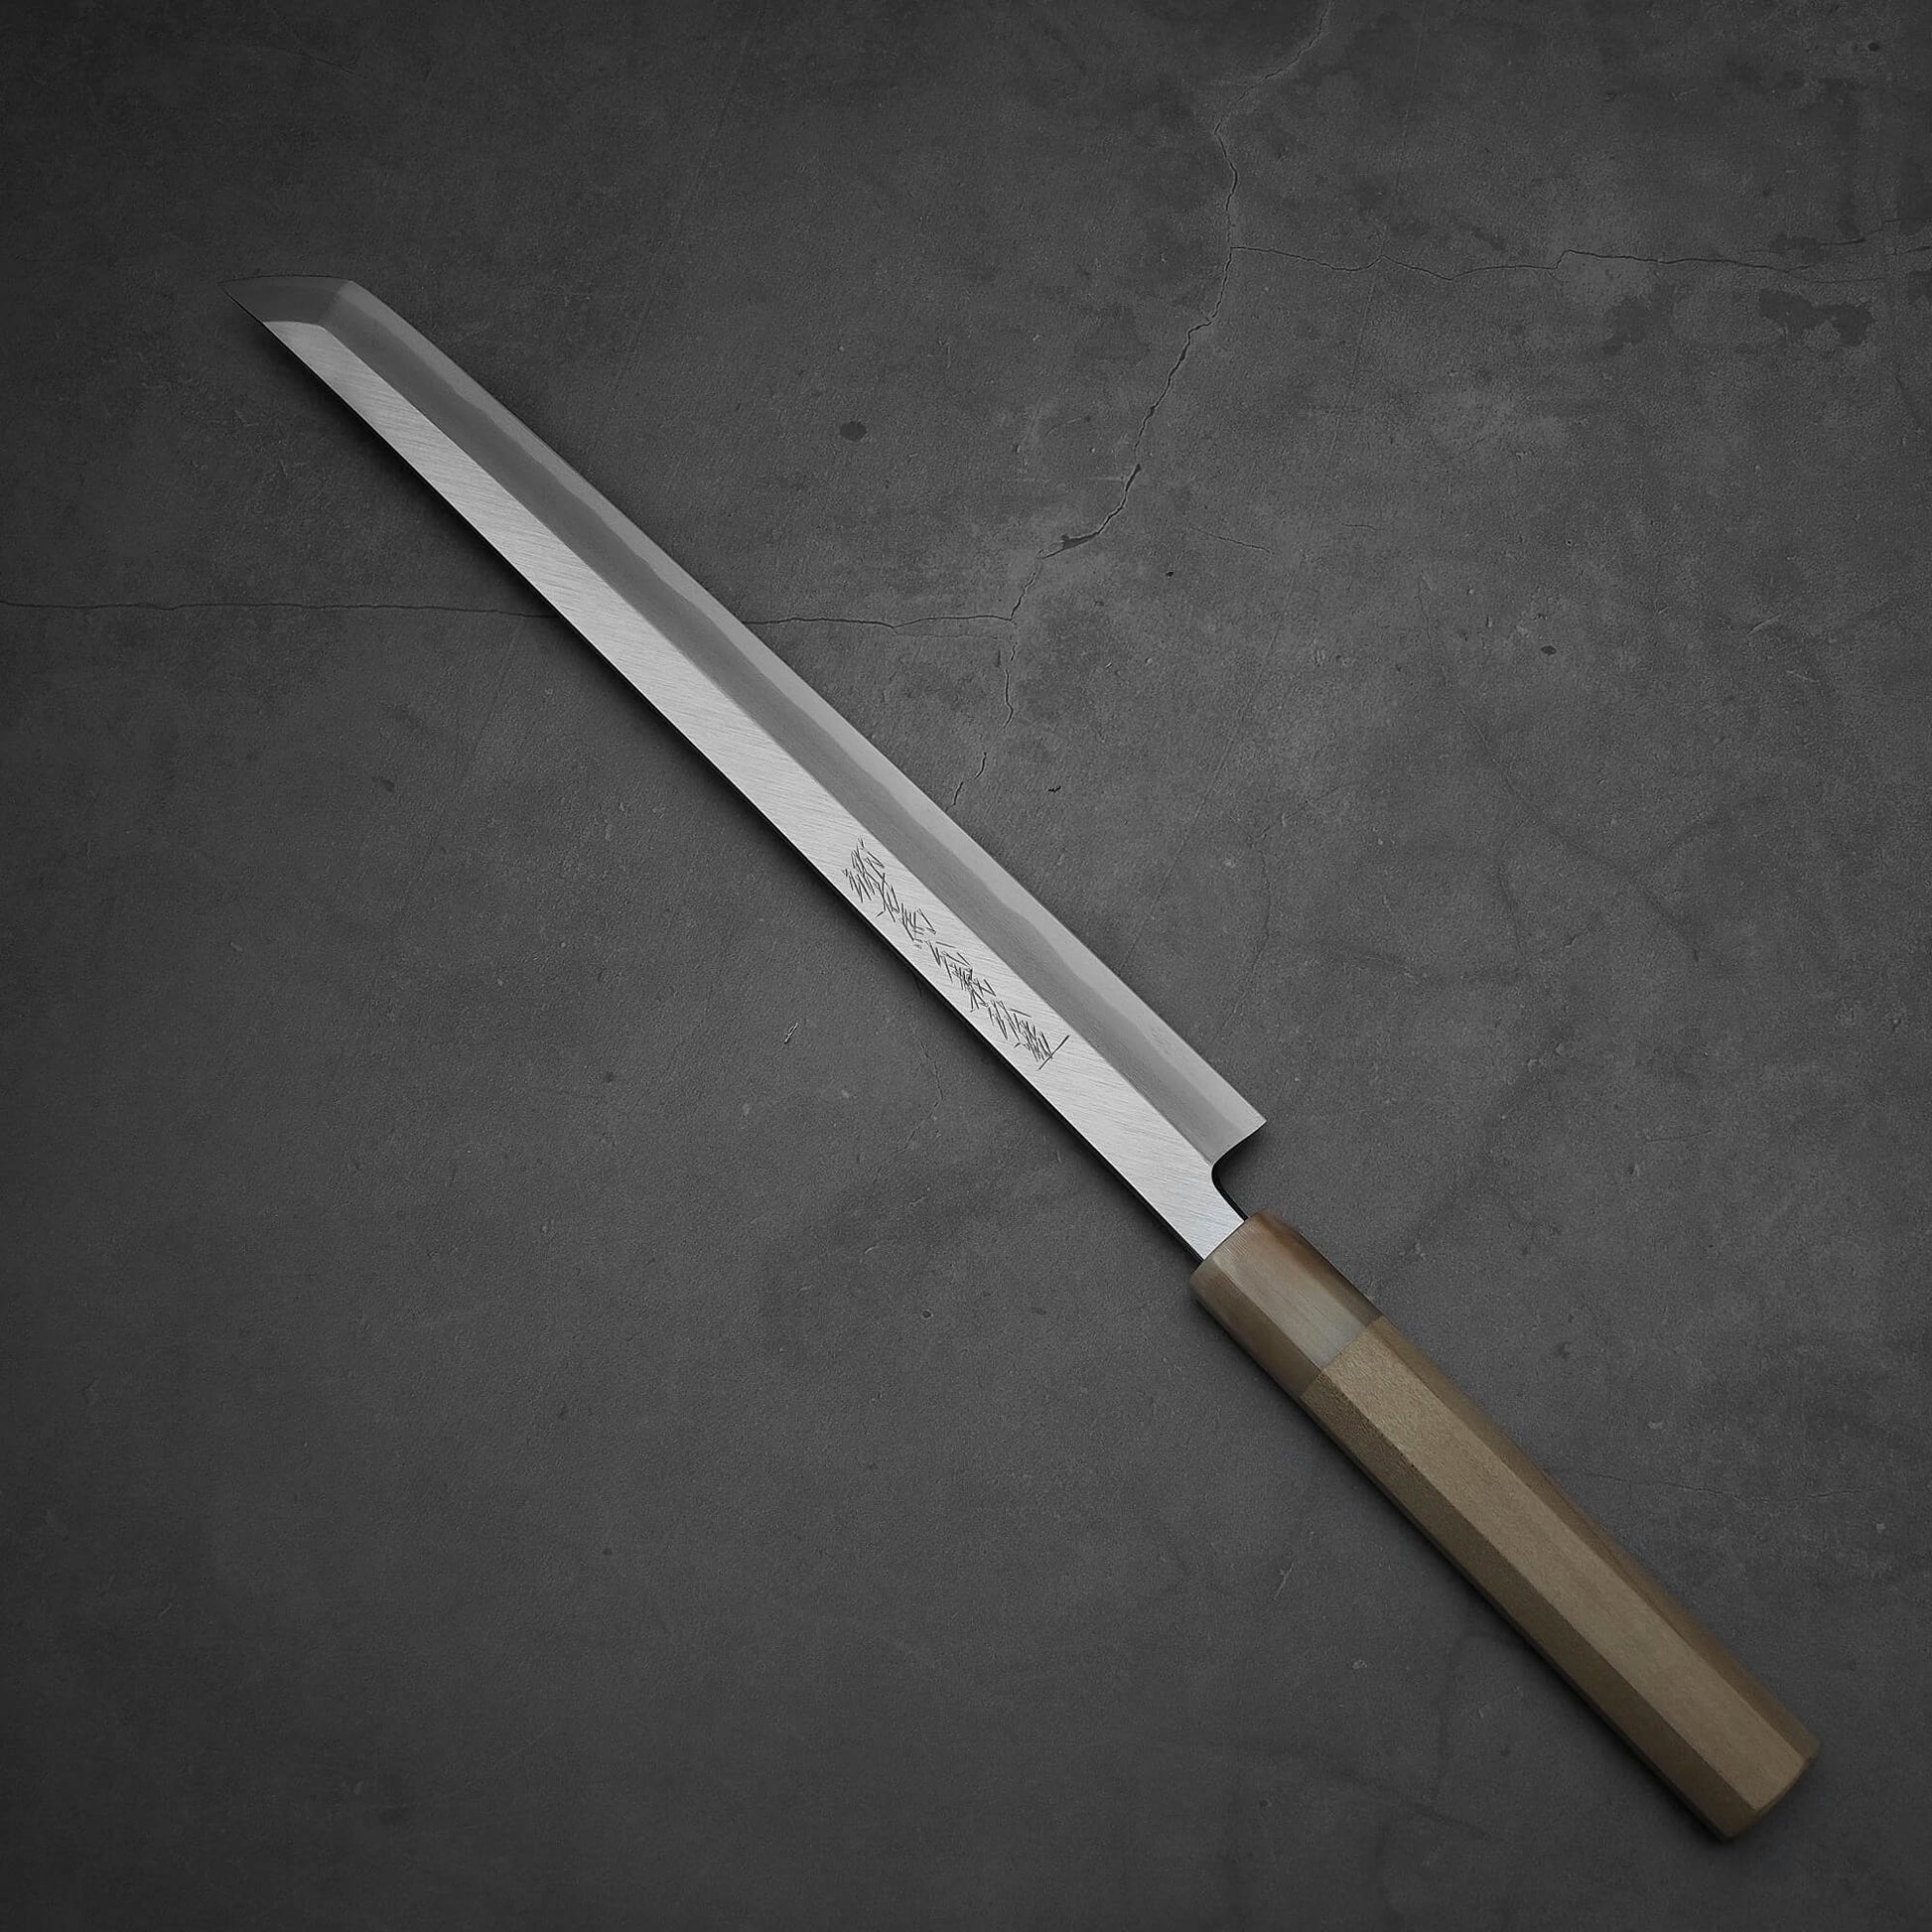 Top down view of Yoshikazu Tanaka 300mm sakimaru takohiki knife with a hand-forged blade made of shirogami#2 steel.